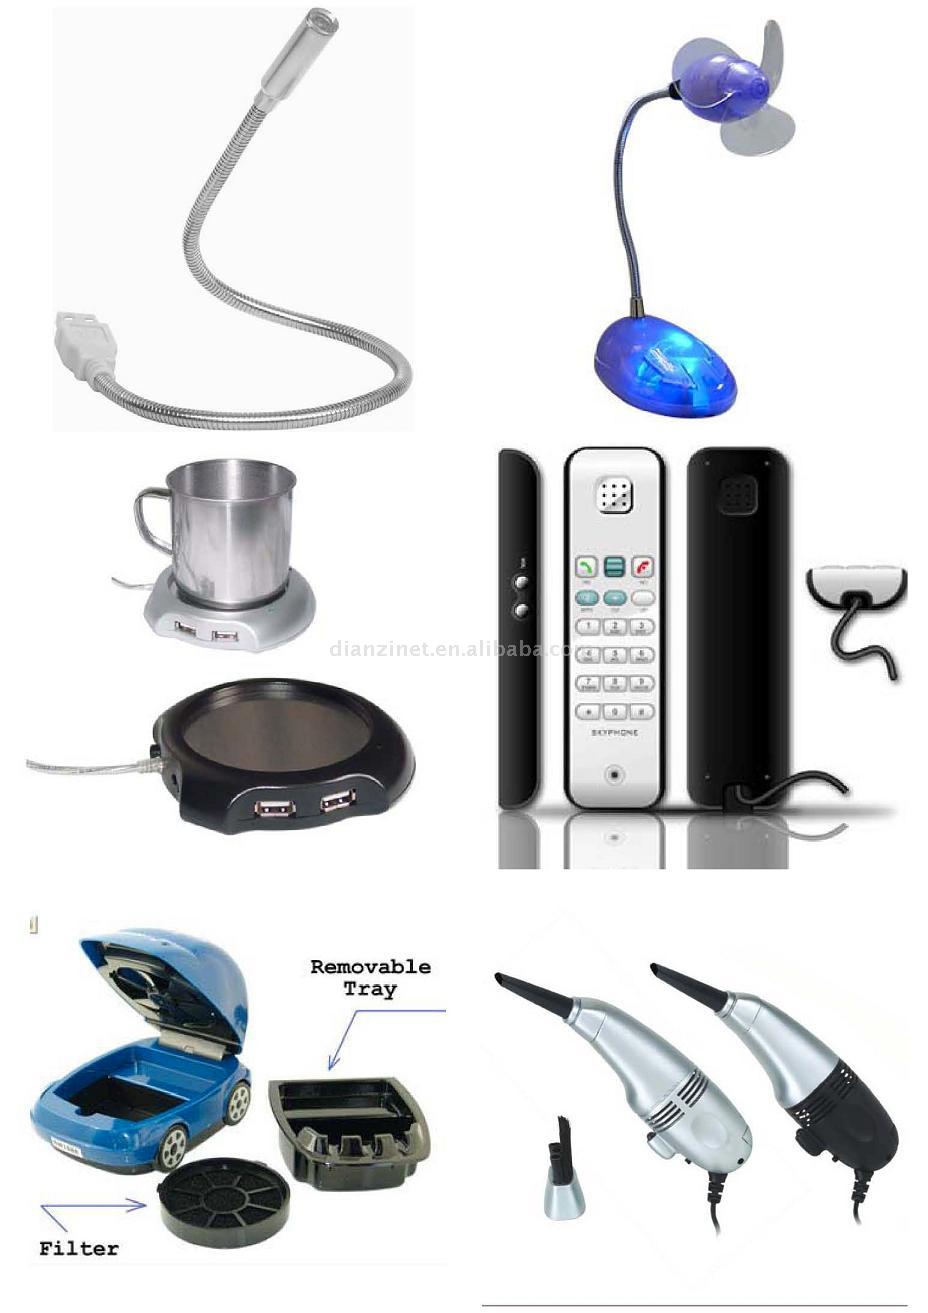  USB Light/Fan/Cleaner/Cup Warmer/Skype Phone (USB Light / Fan / Cleaner / подогрева чашек / Skype телефон)